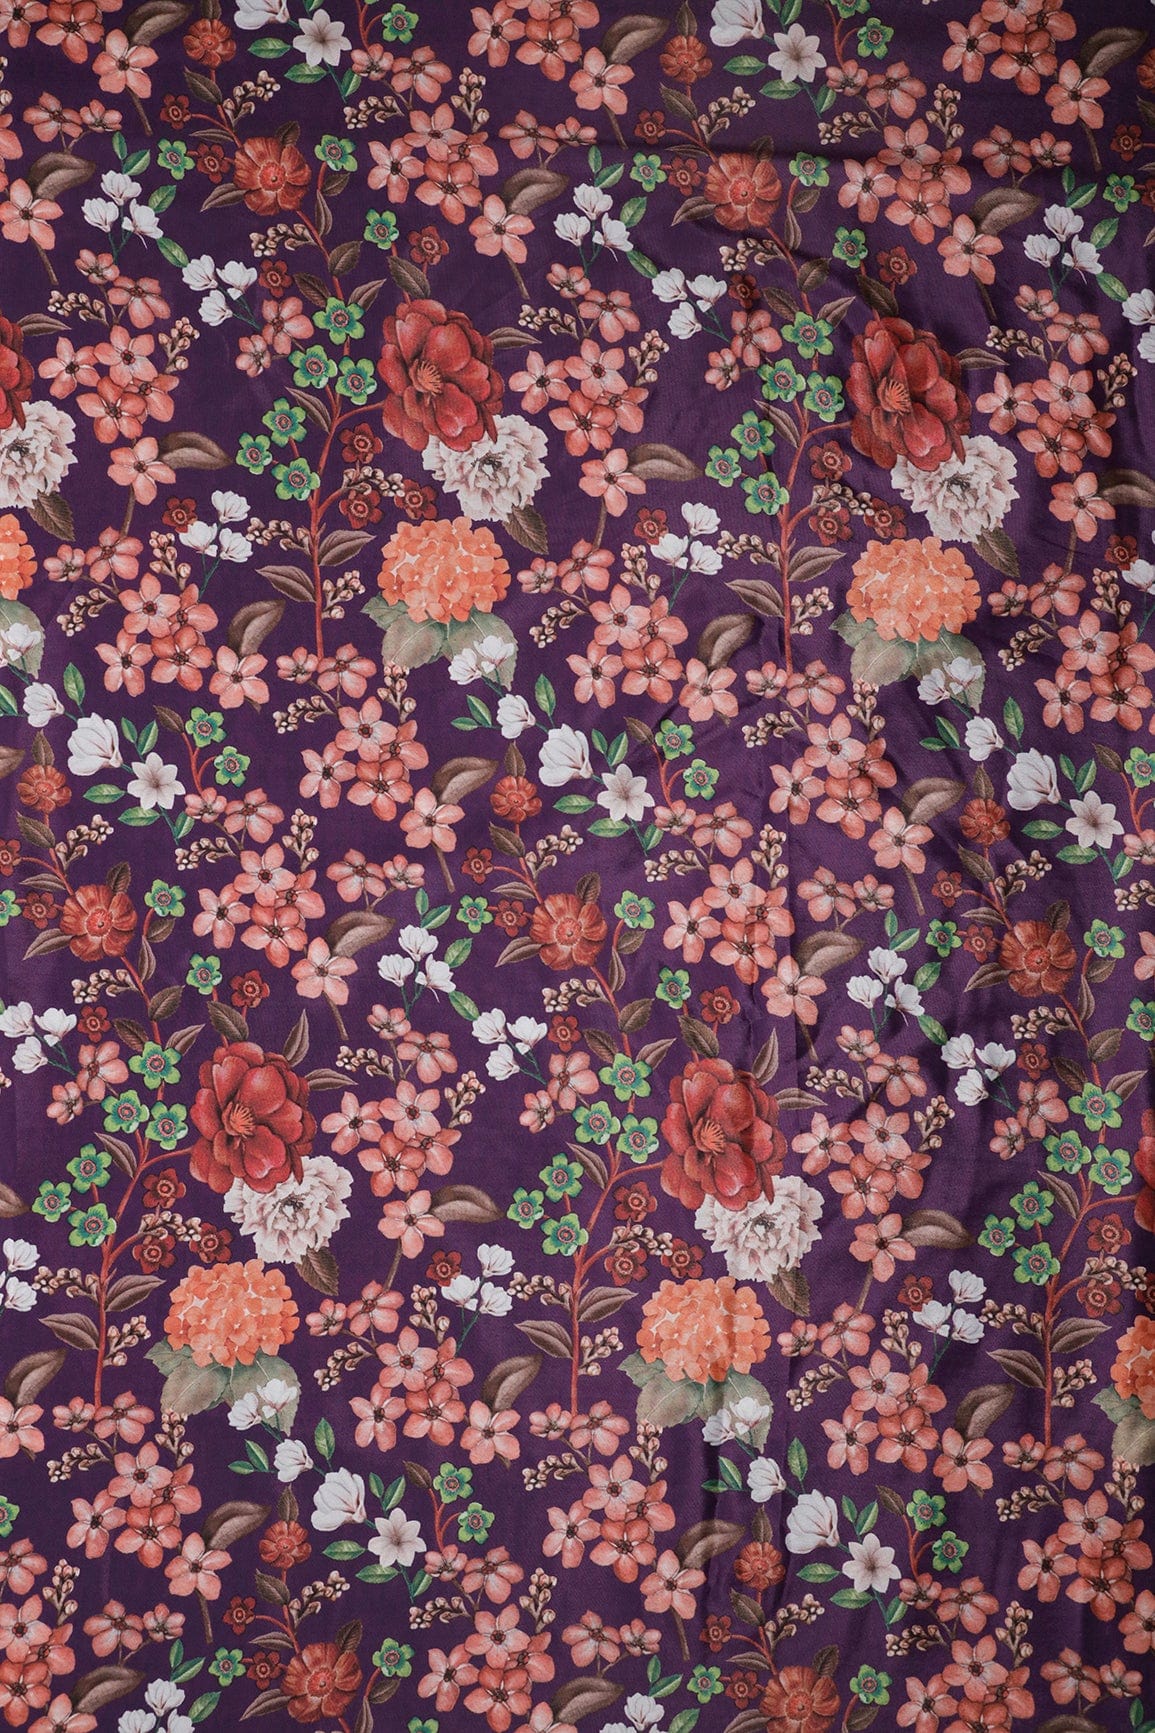 doeraa Prints Multi Color Floral Pattern Digital Print On Purple Malai Crepe Fabric